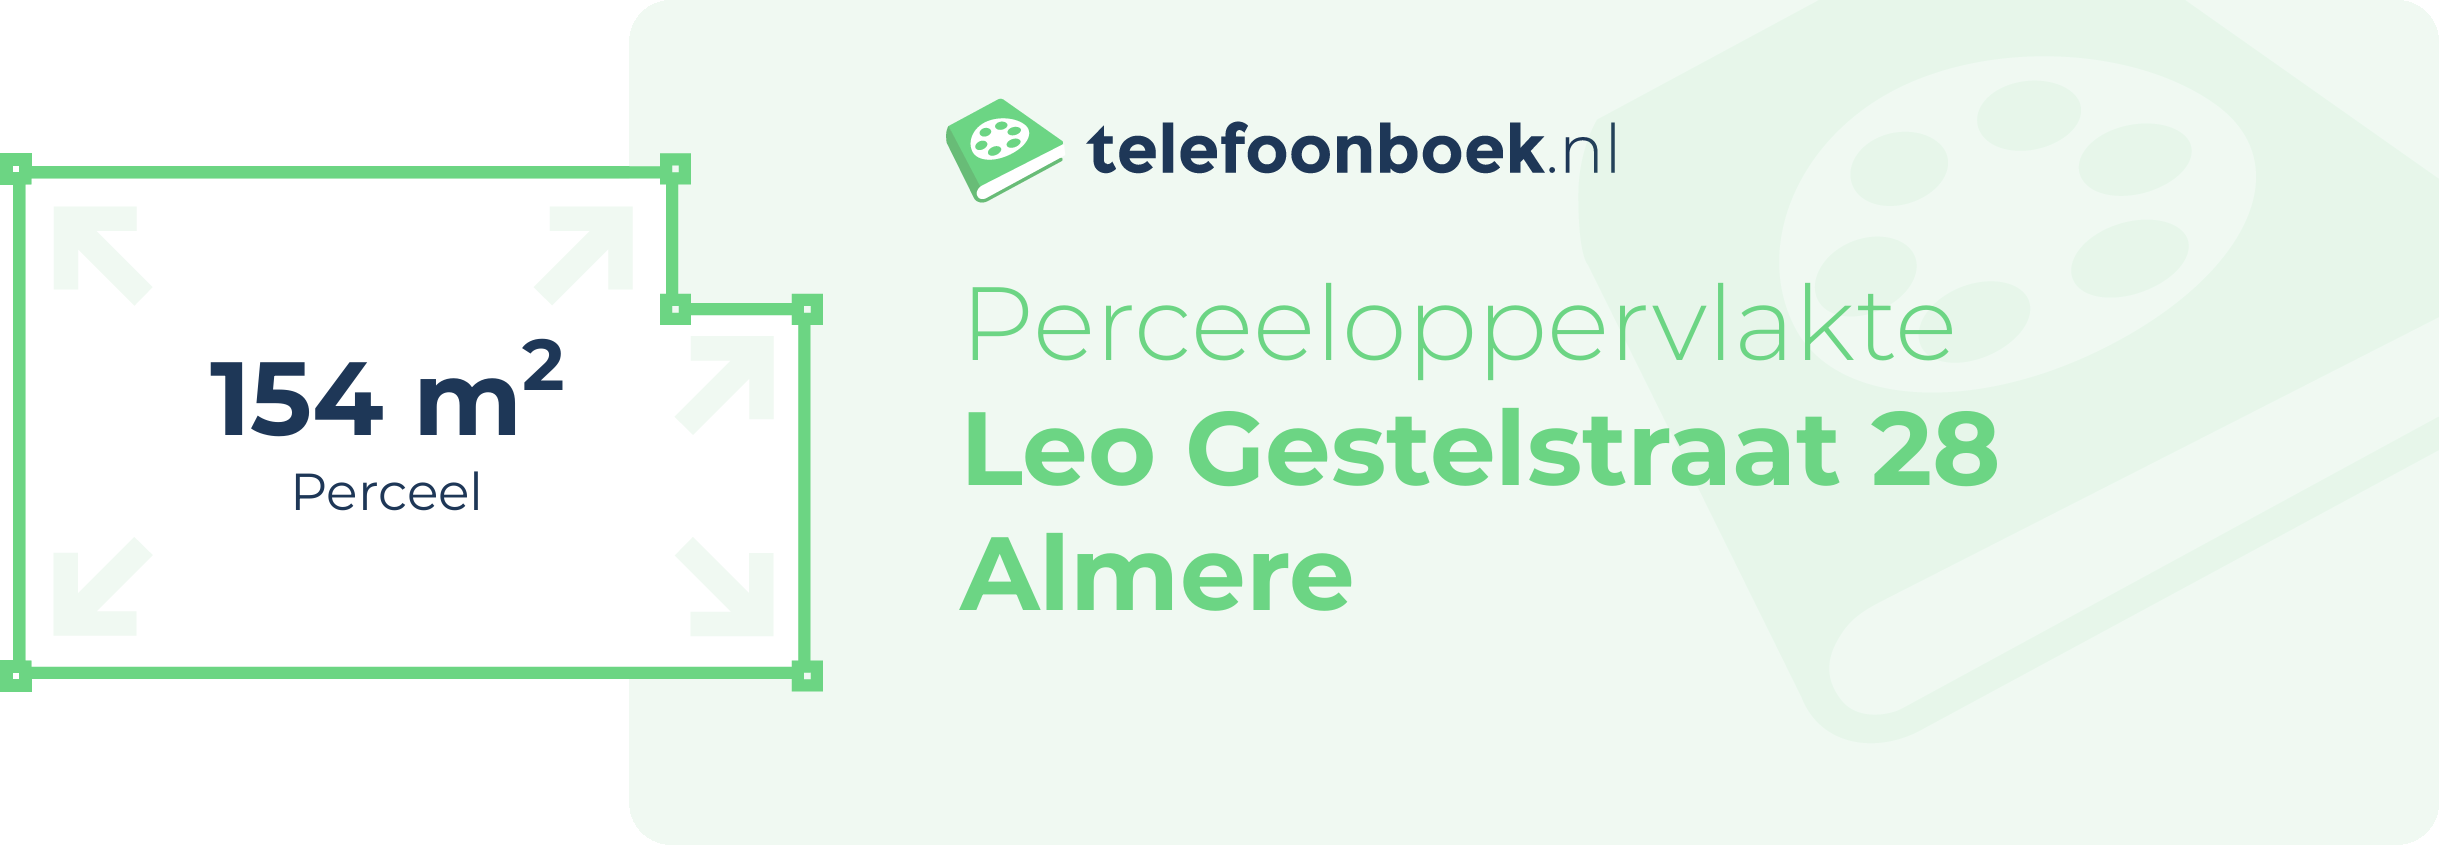 Perceeloppervlakte Leo Gestelstraat 28 Almere